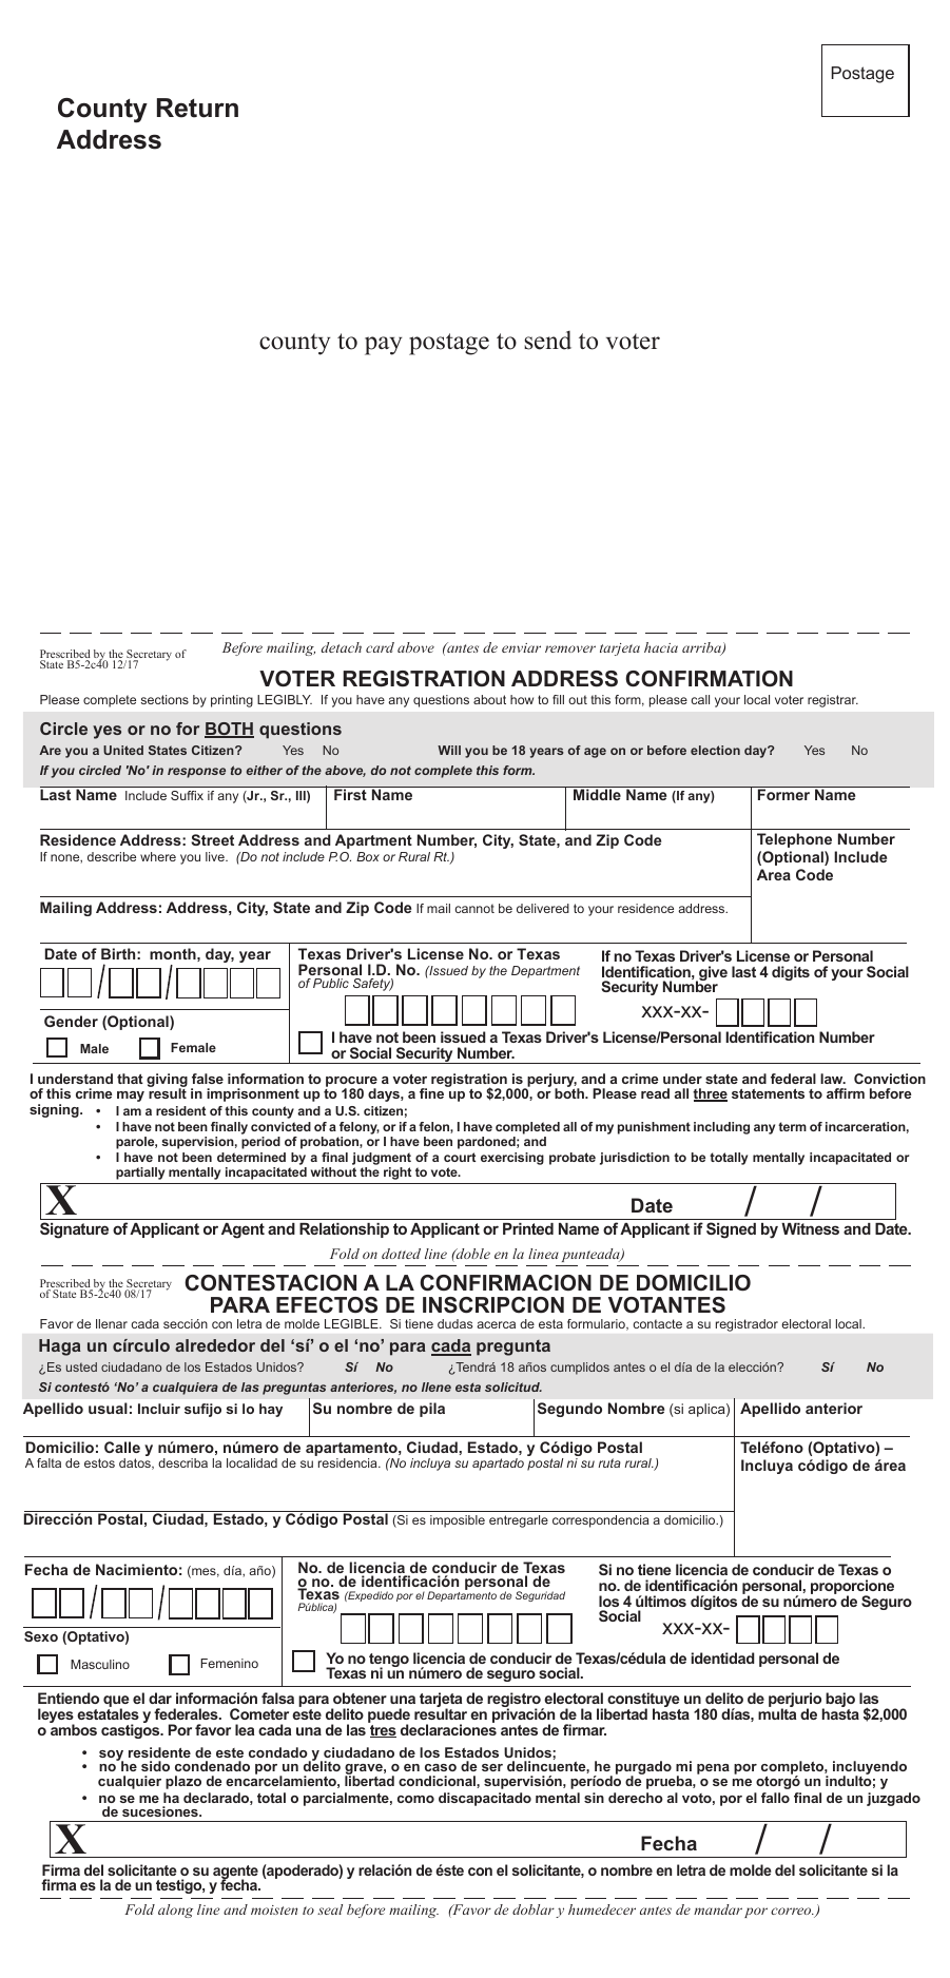 Form B5-2C Voter Registration Address Confirmation - Tri-fold - Texas (English / Spanish), Page 1